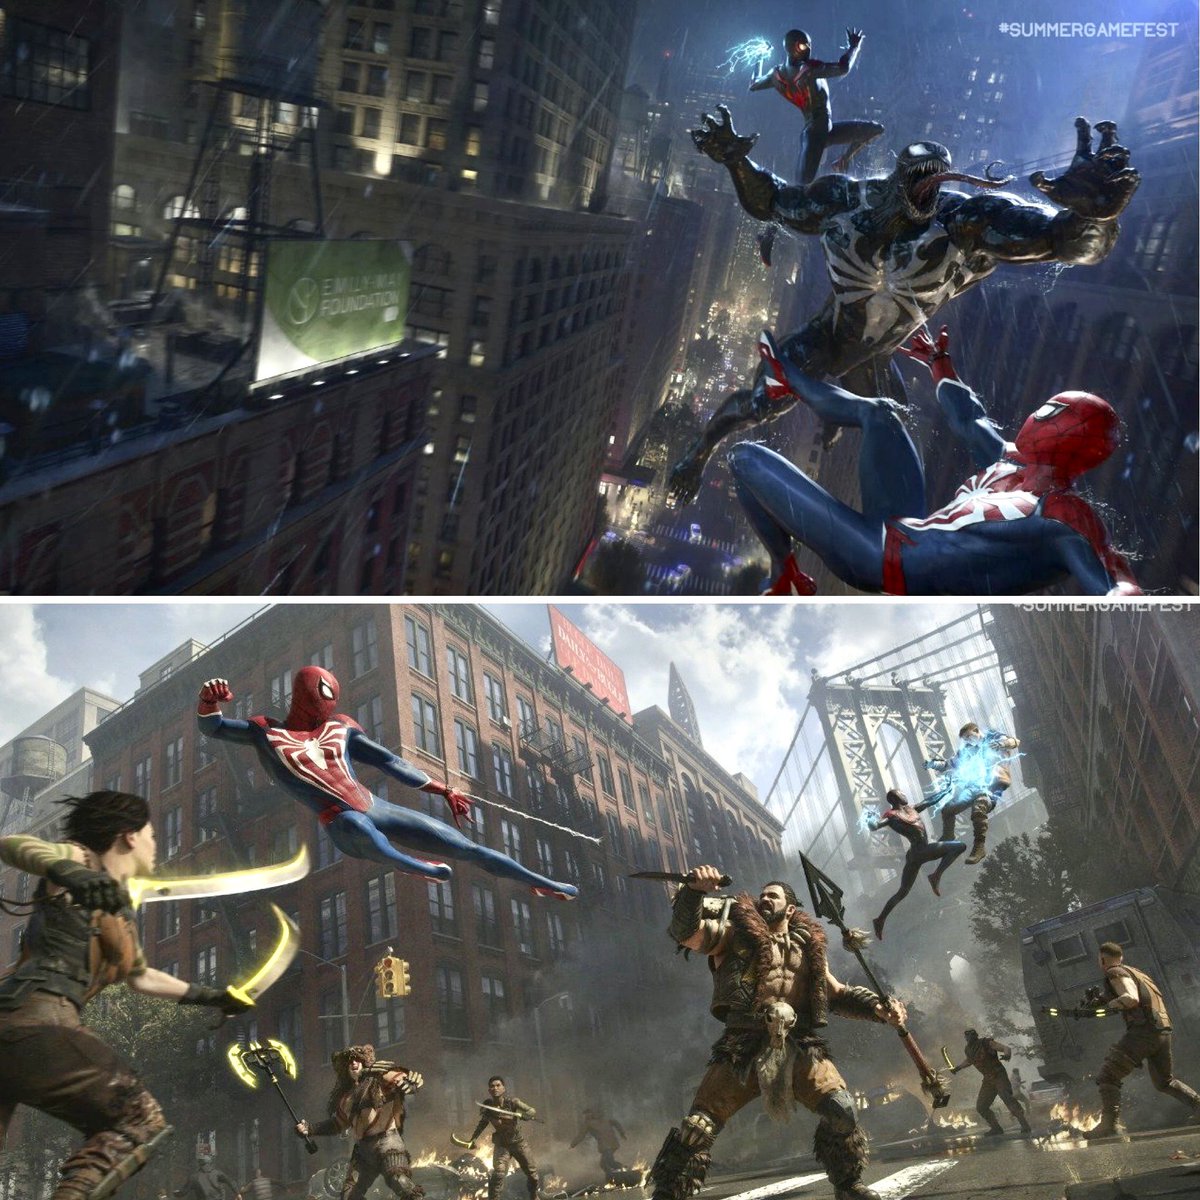 Spider-Man 2 New Concept art showing

- Venom
- Peter
- Miles
- Kraven